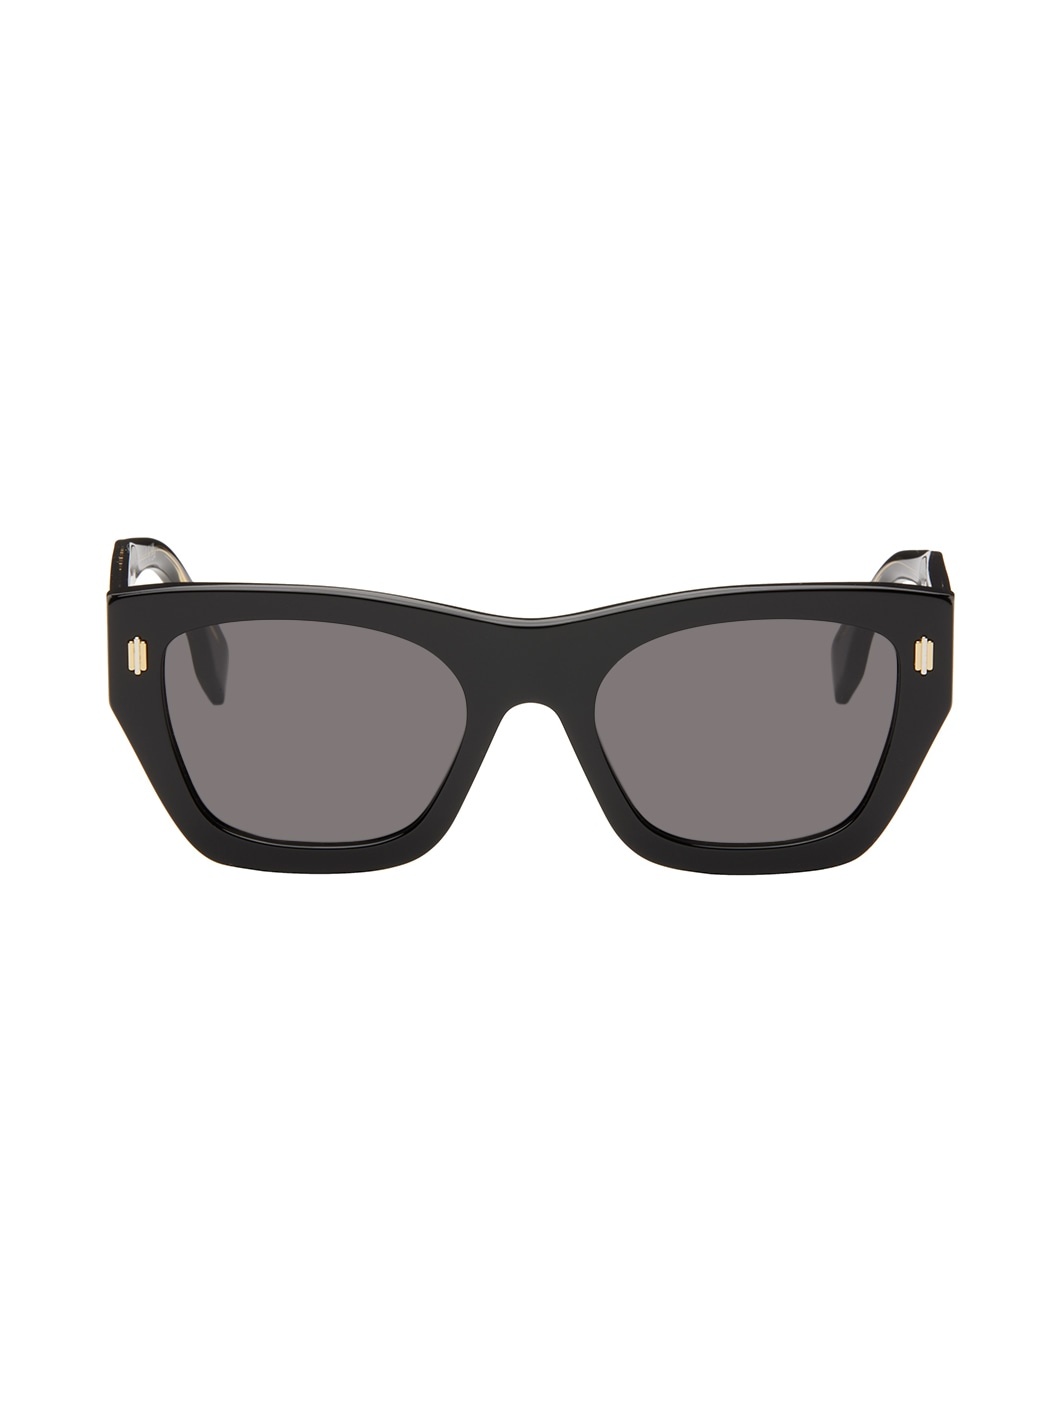 Black Fendi Roma Sunglasses - 1